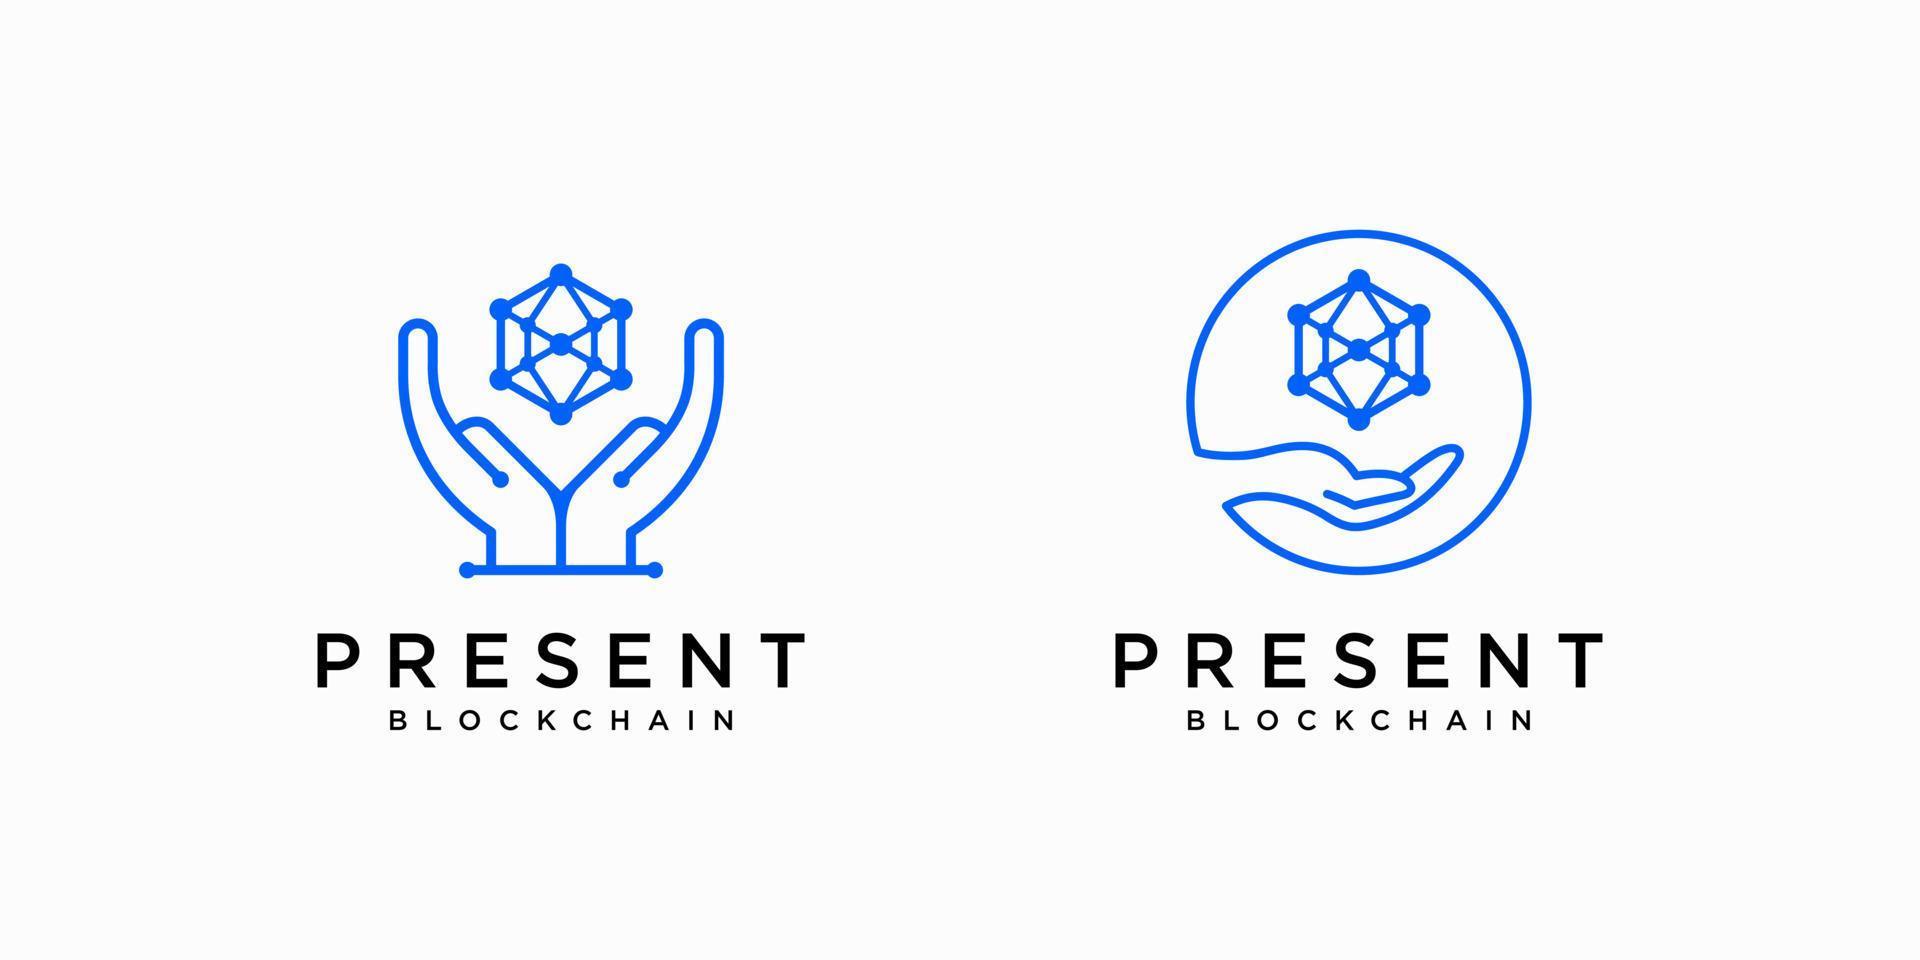 ensemble de main technologie numérique blockchain hexagone connecter crypto monnaie connexion vector logo design